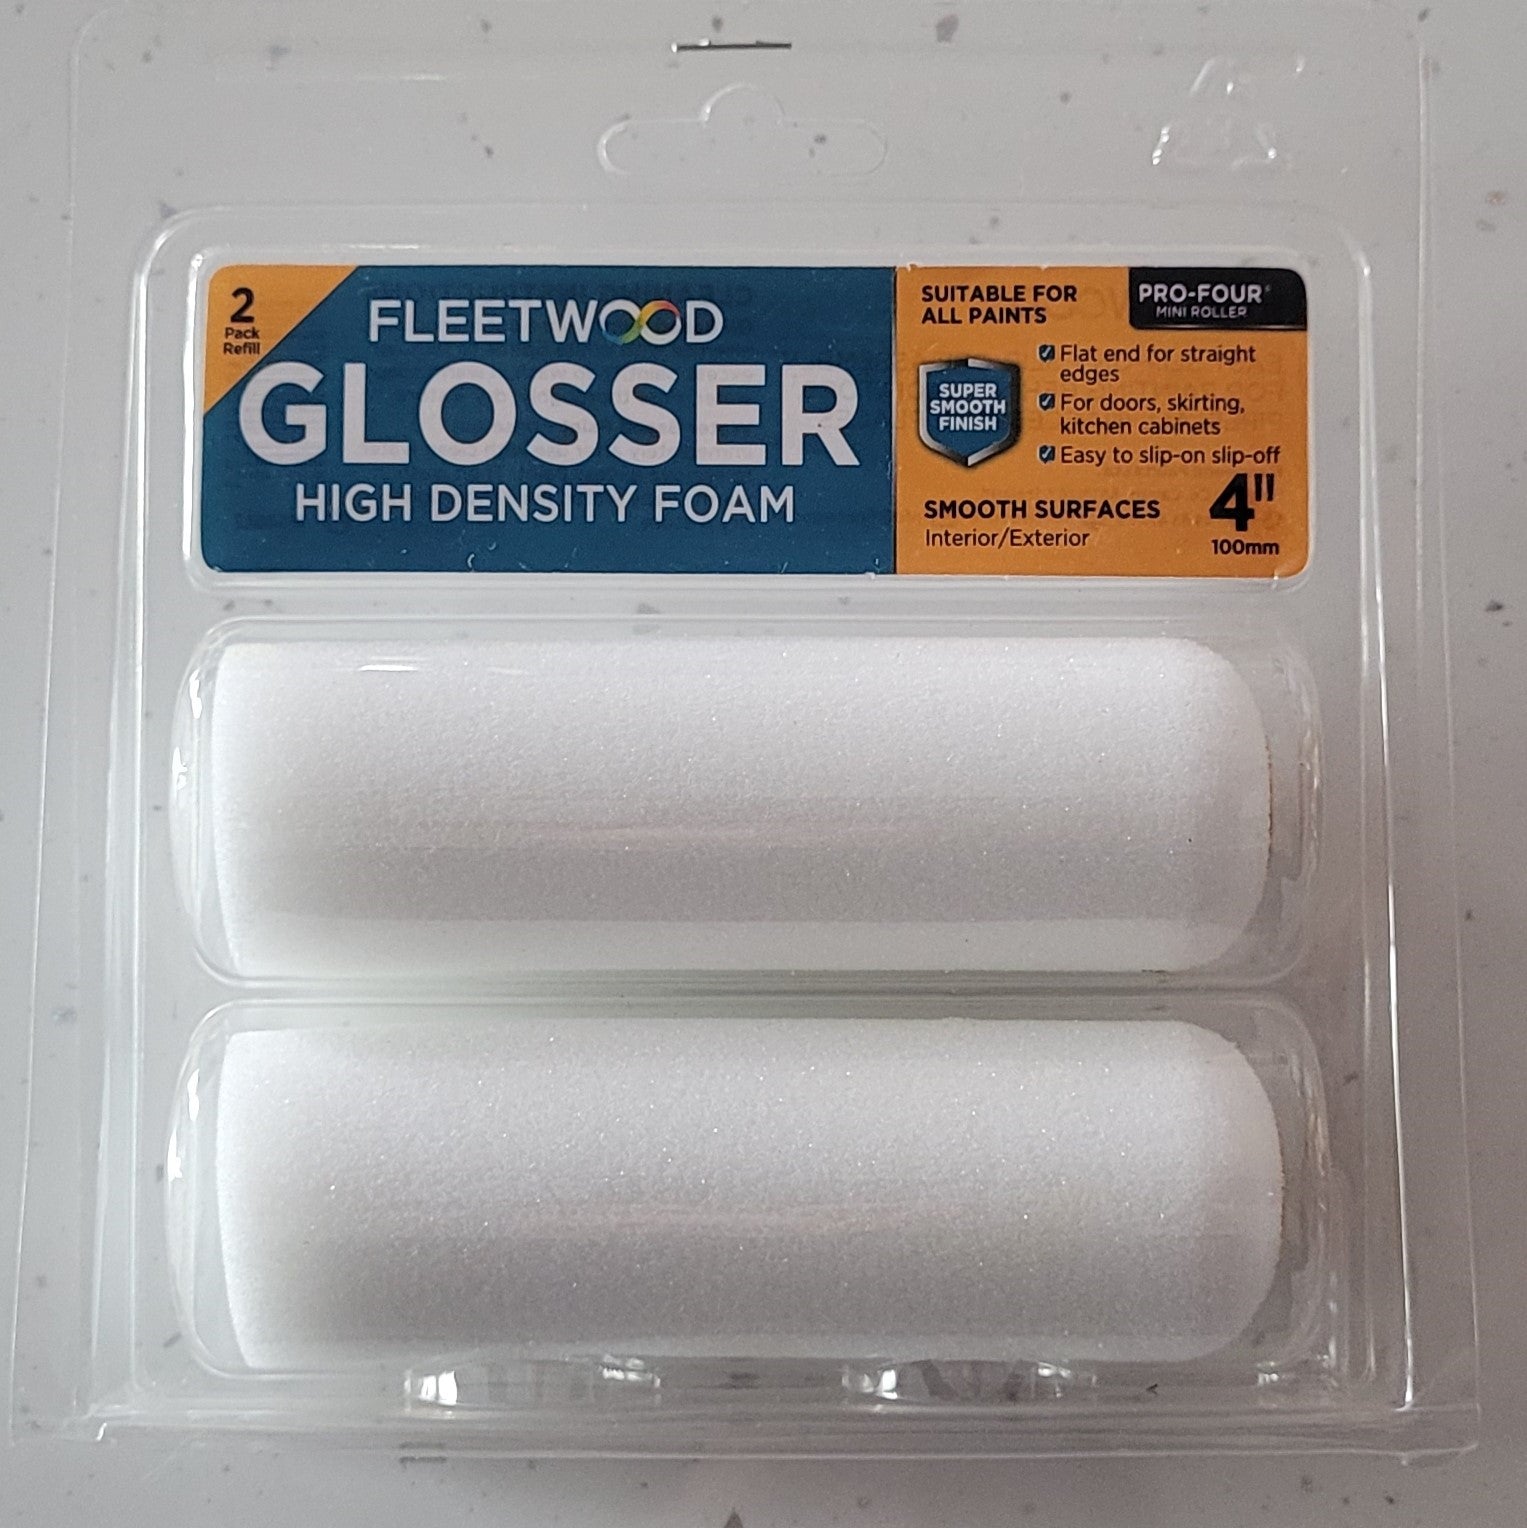 Fleetwood 4" Glosser Foam Roller Sleeves